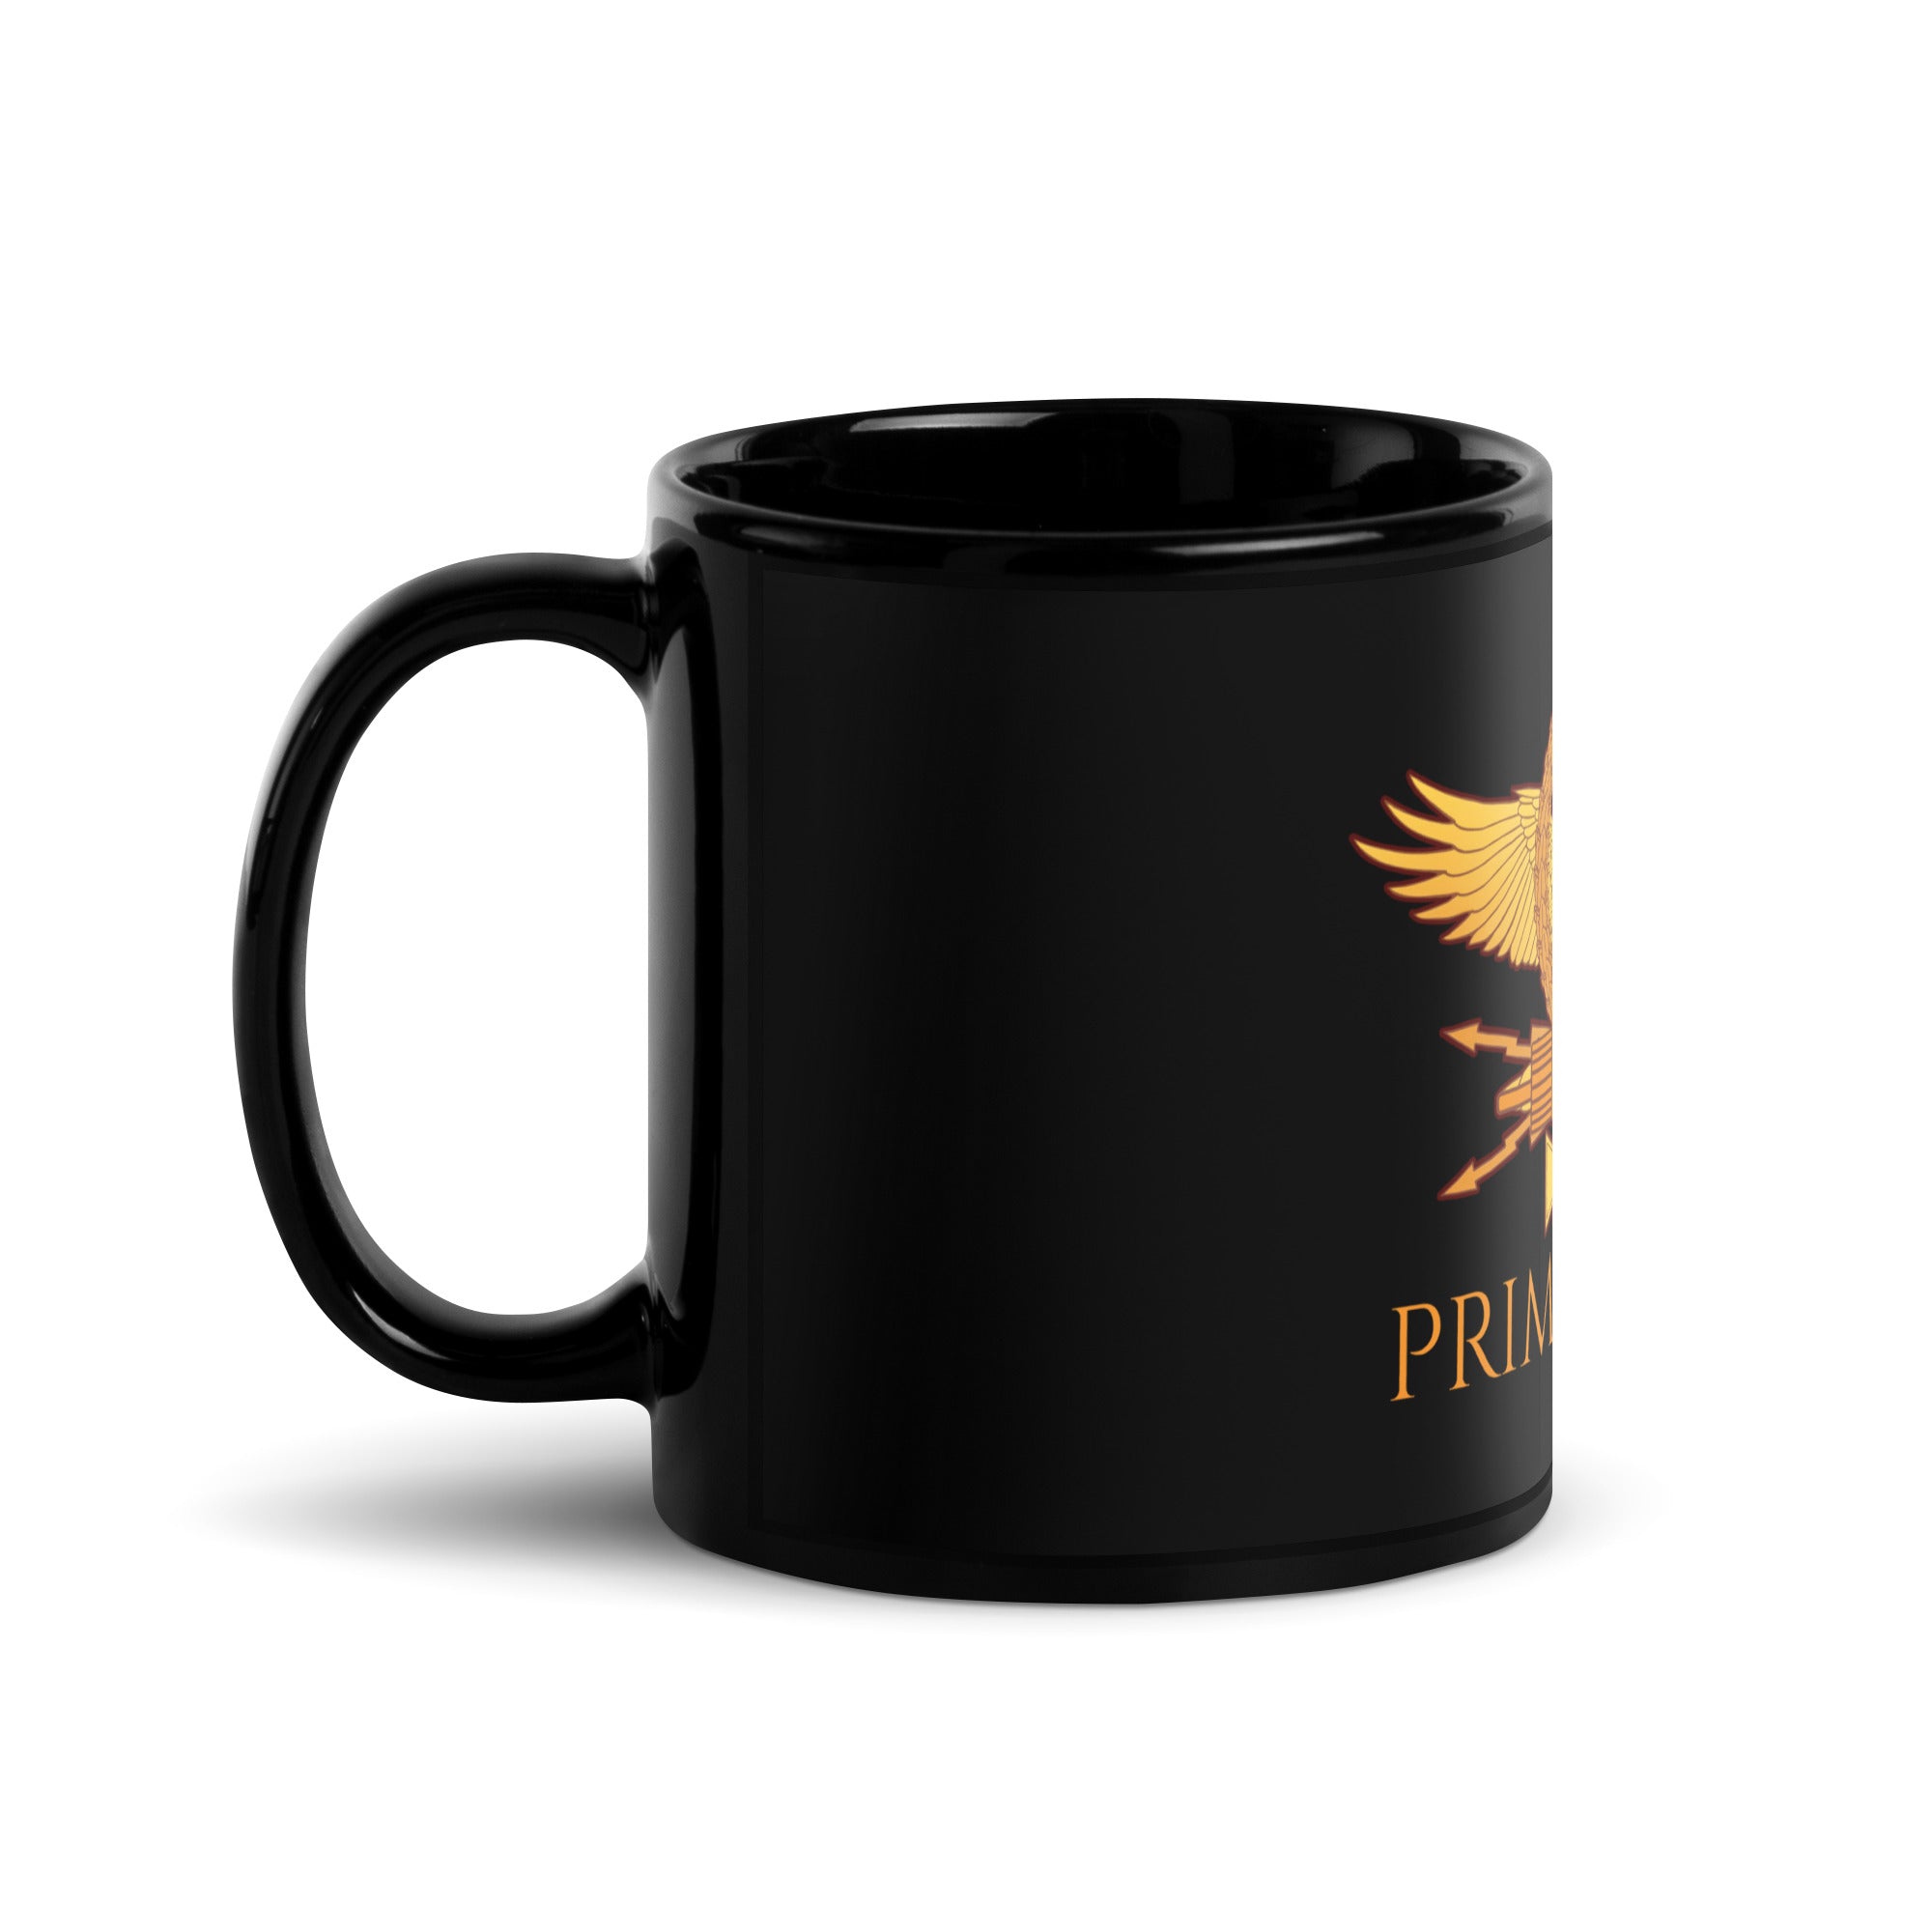 Primus Pilus - Roman Eagle - Black Glossy Mug